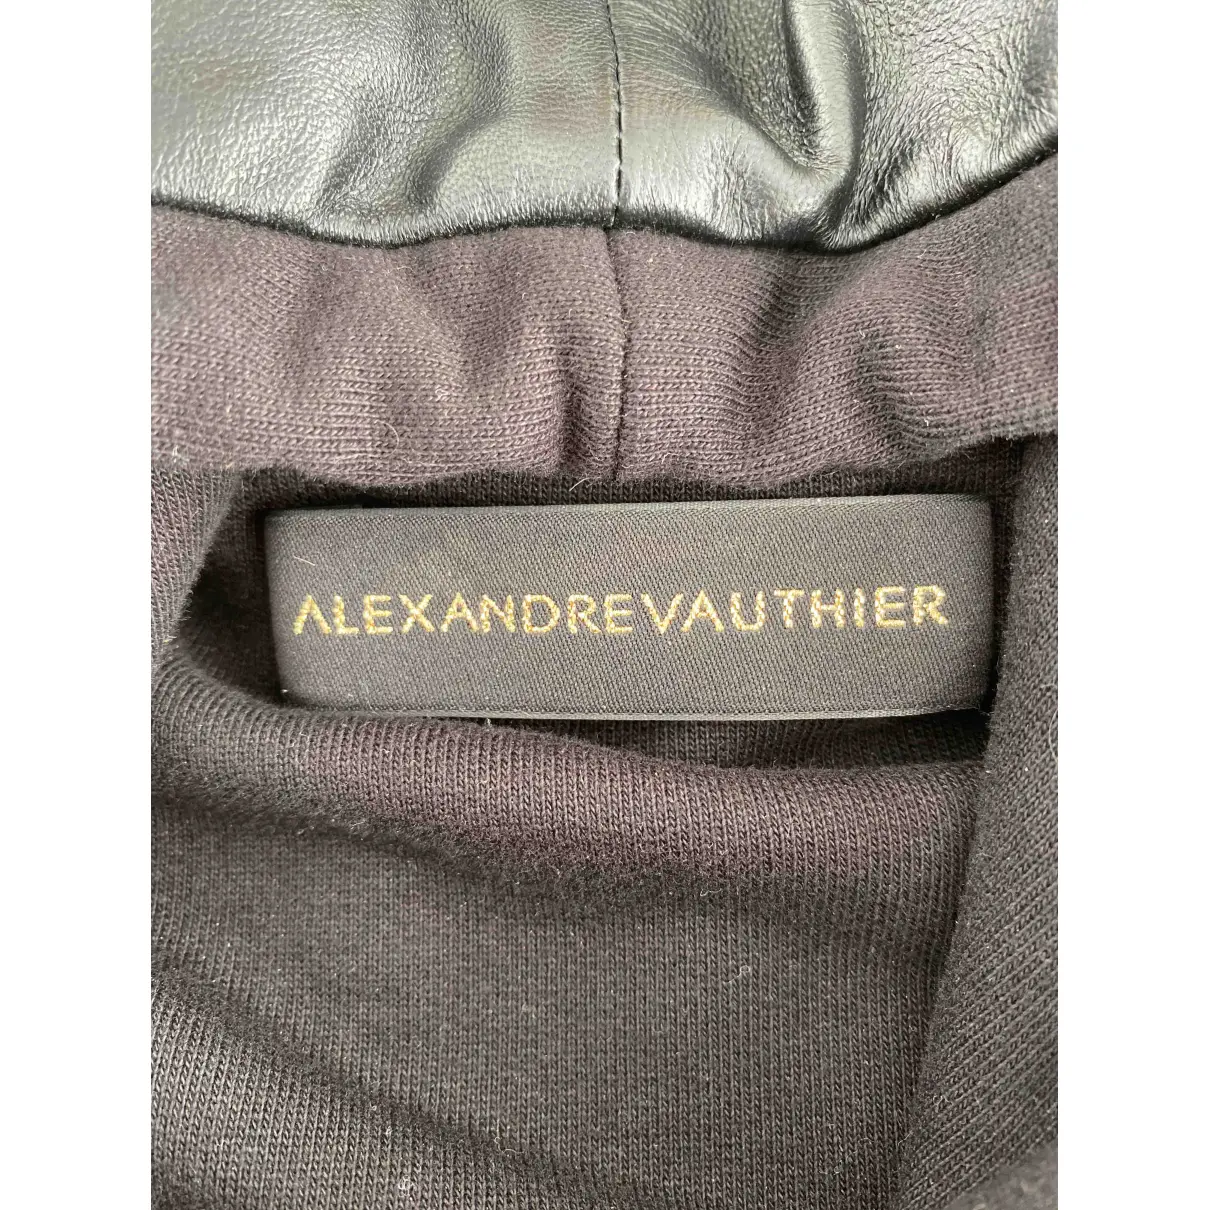 Leather top Alexandre Vauthier